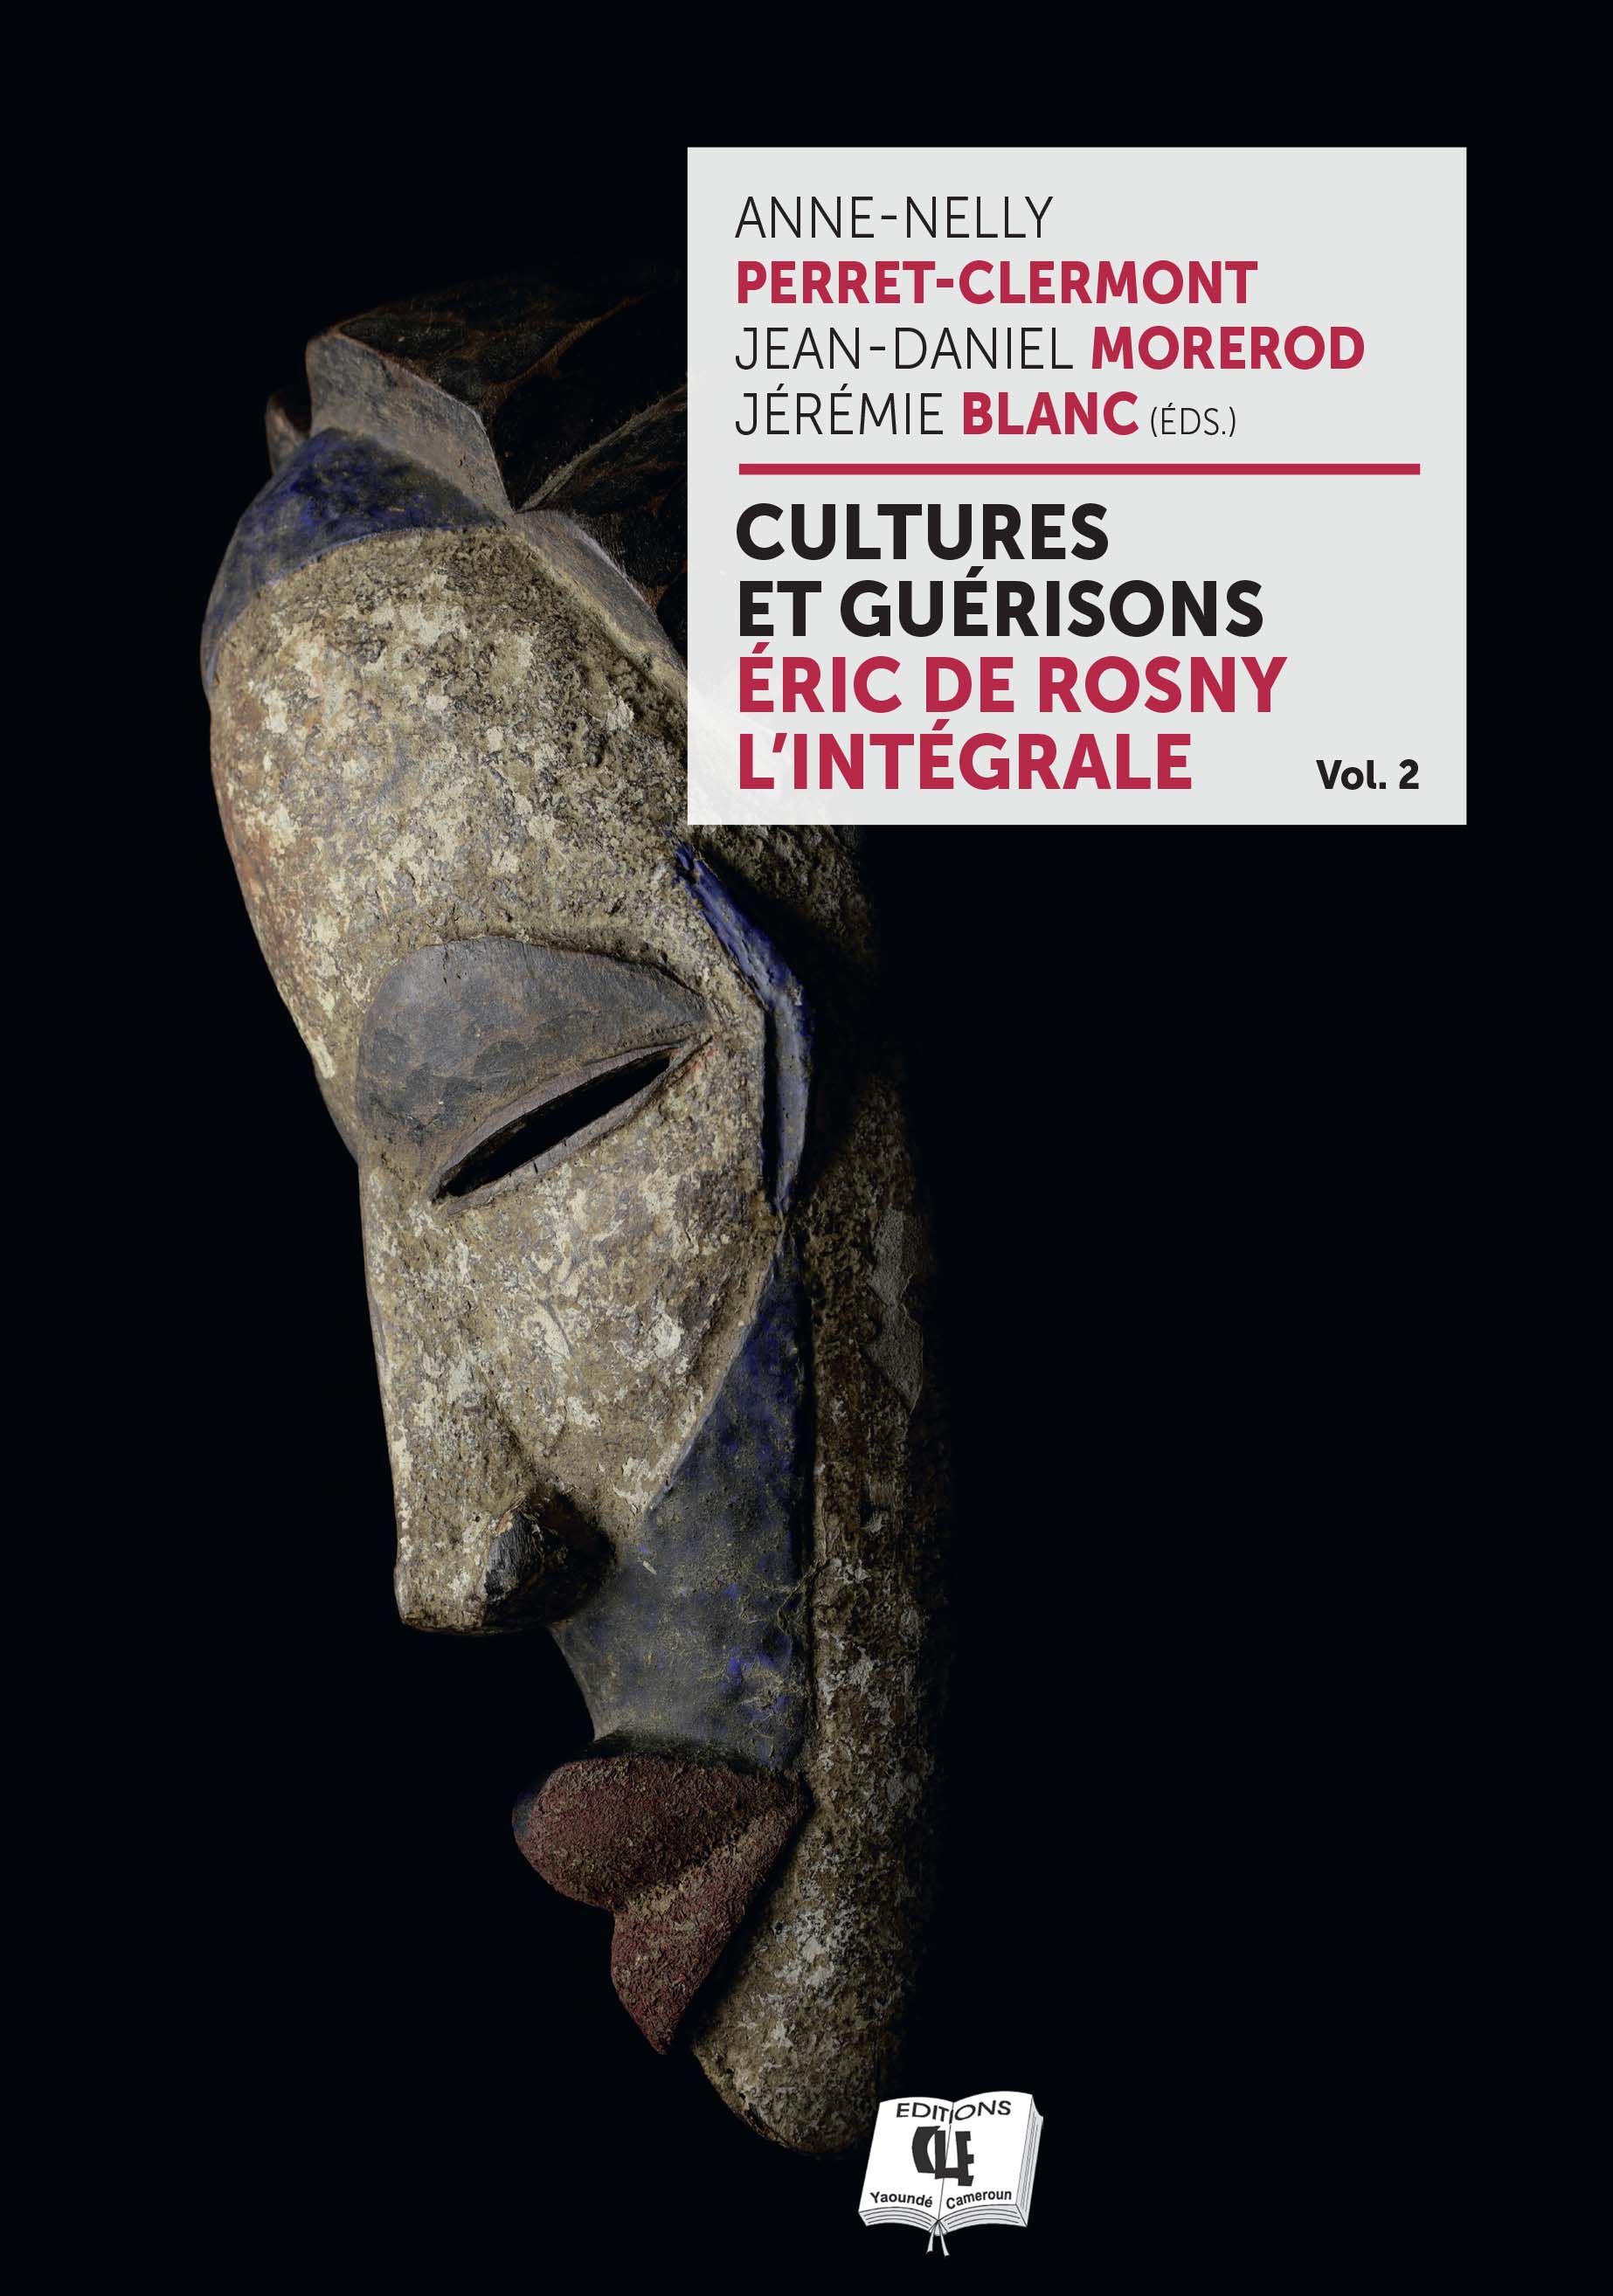 Cultures et guérisons (Volume II)